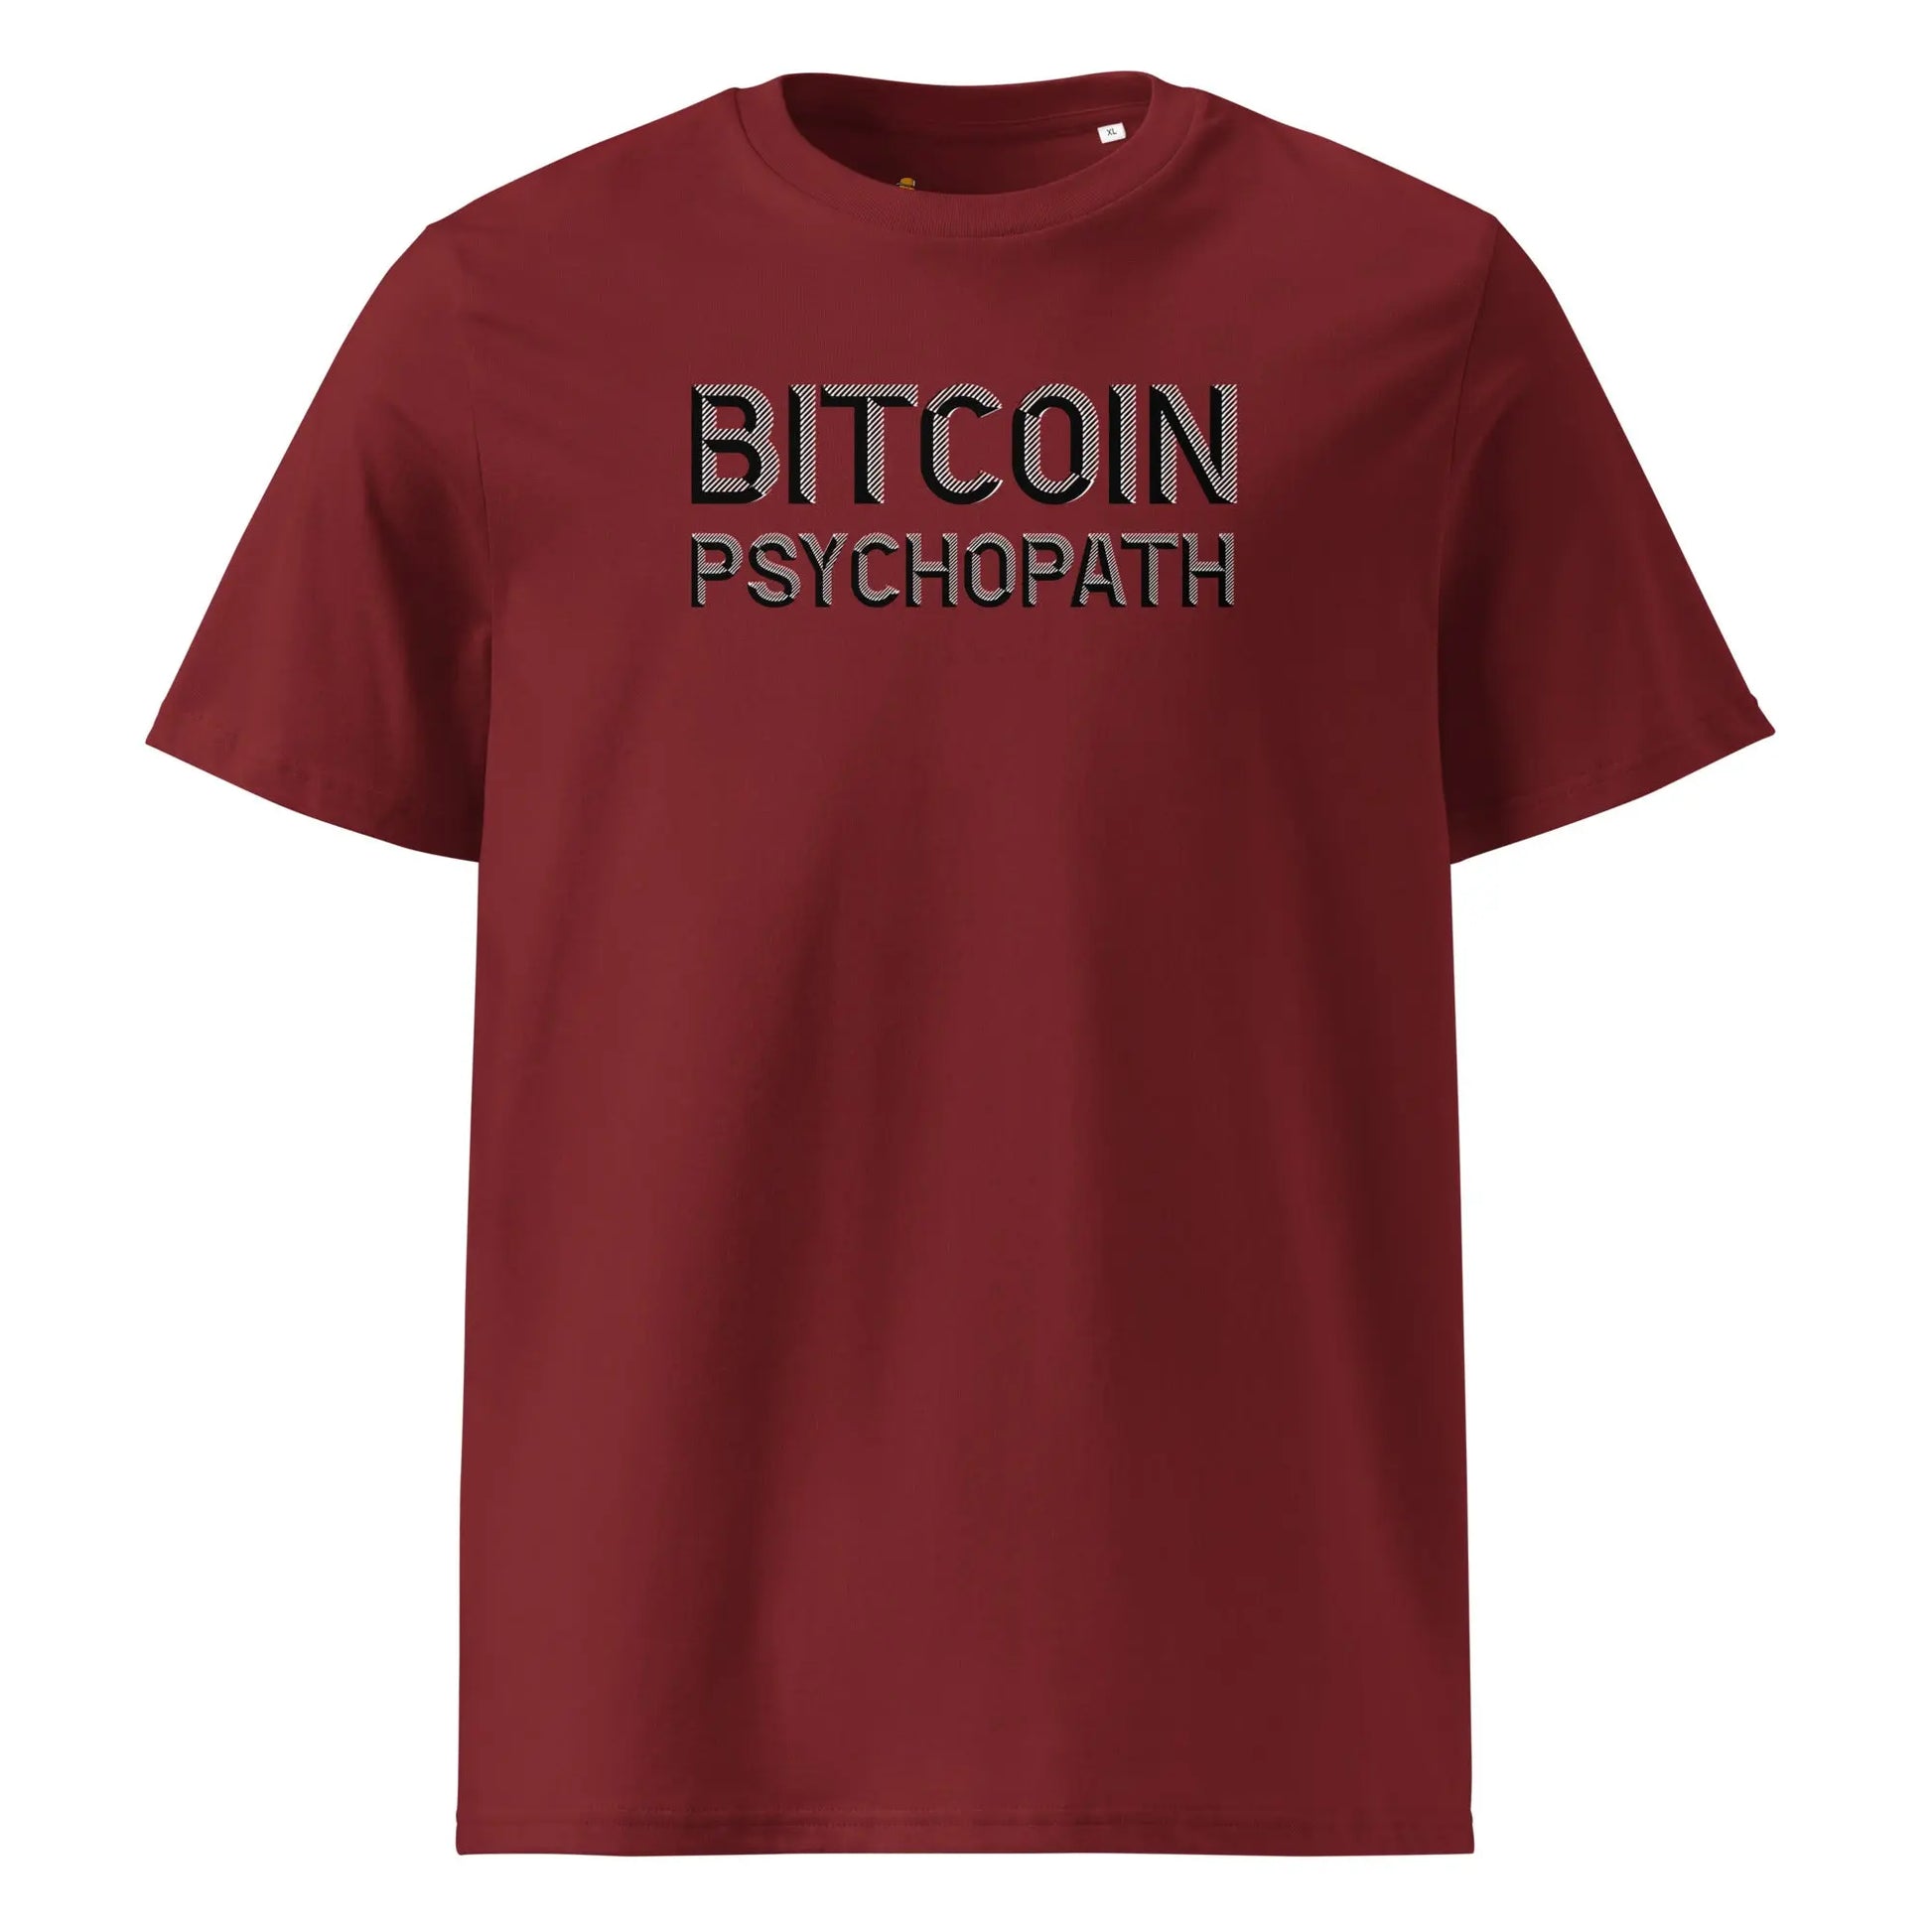 Bitcoin Psychopath - Premium Unisex Organic Cotton Bitcoin T-shirt Store of Value